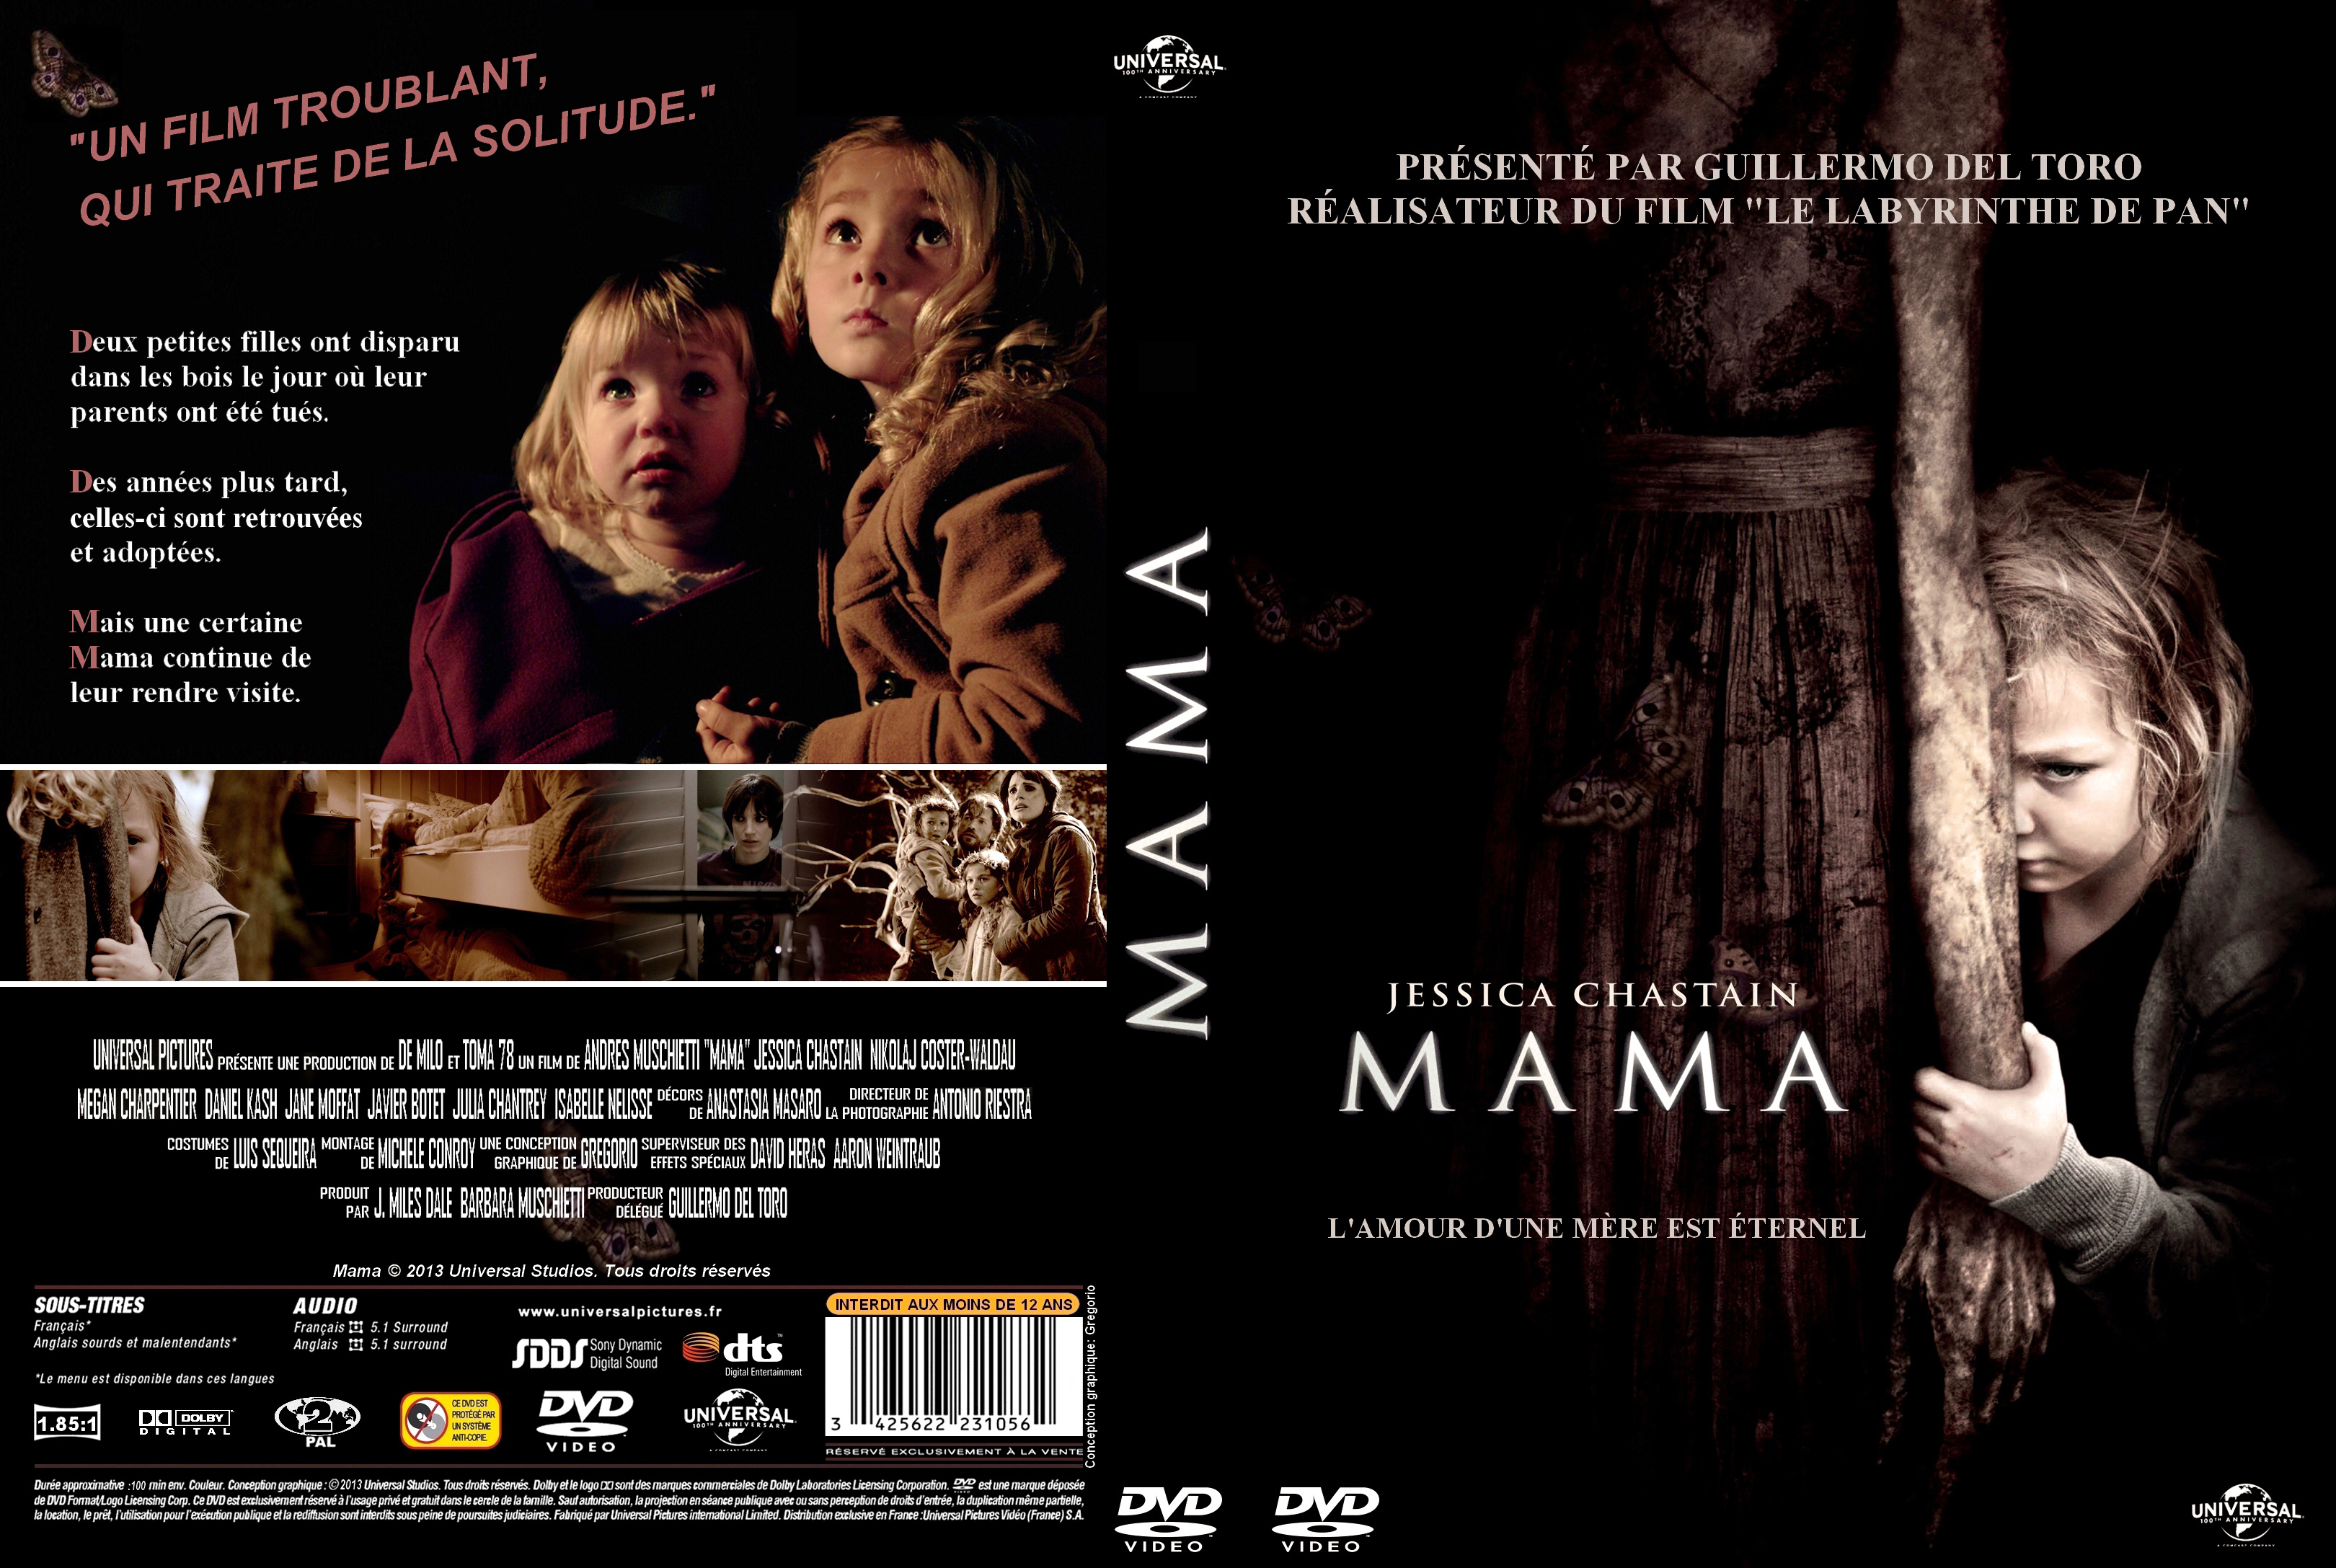 Jaquette DVD Mama custom